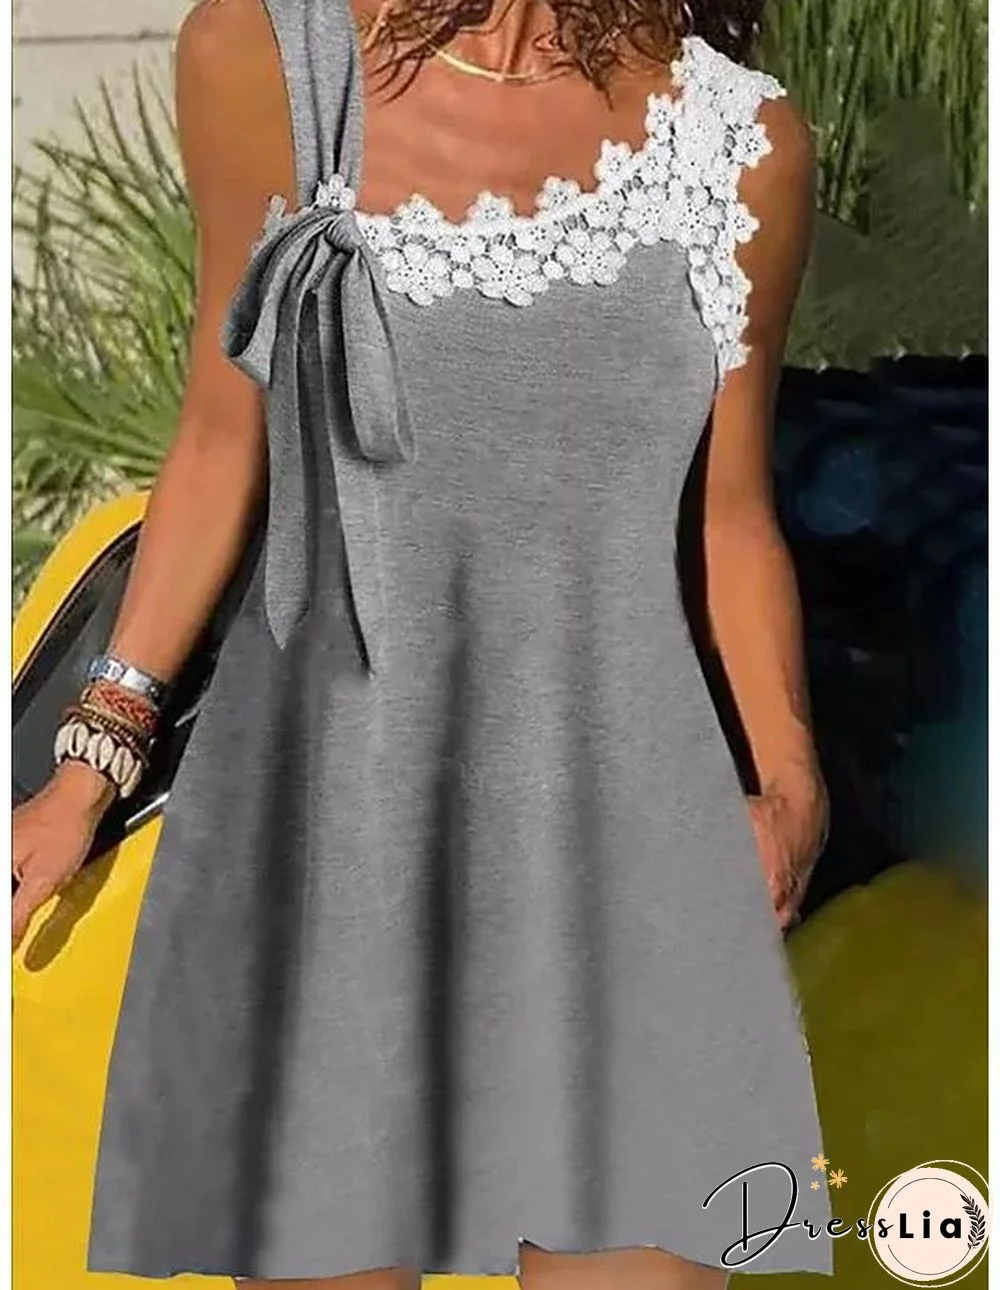 Lace Panel One Shoulder Sleeveless Slim Fitting Knit Dress